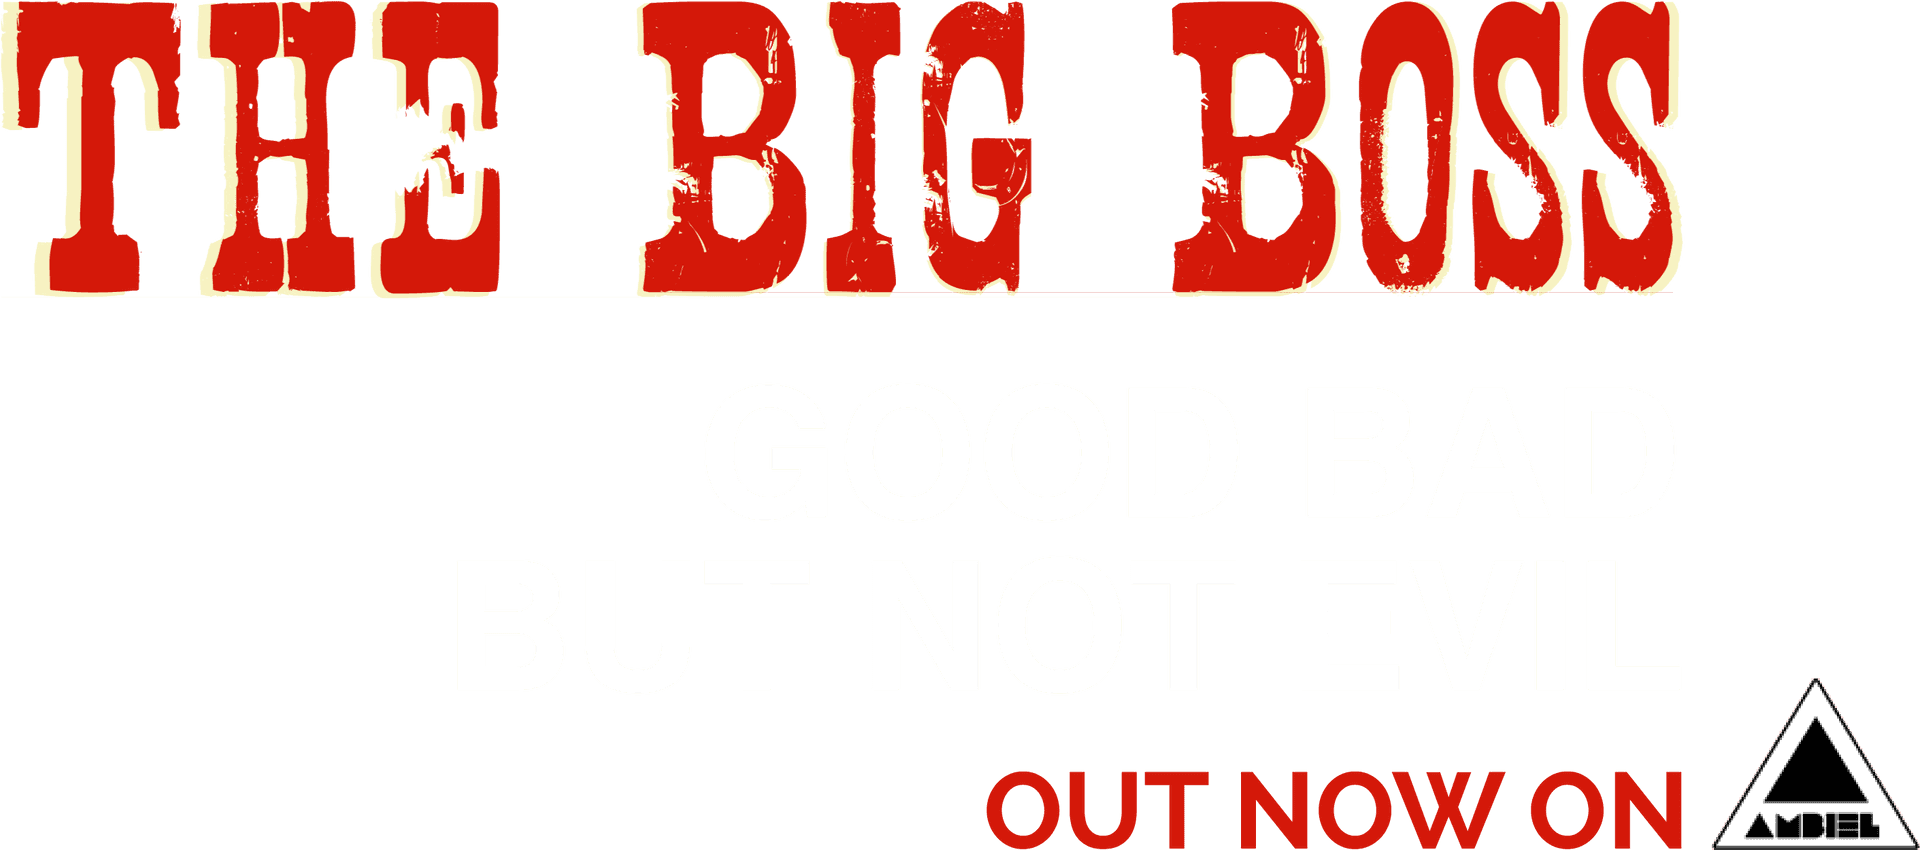 The Big Boss Good Bad Not Evil Album Cover PNG